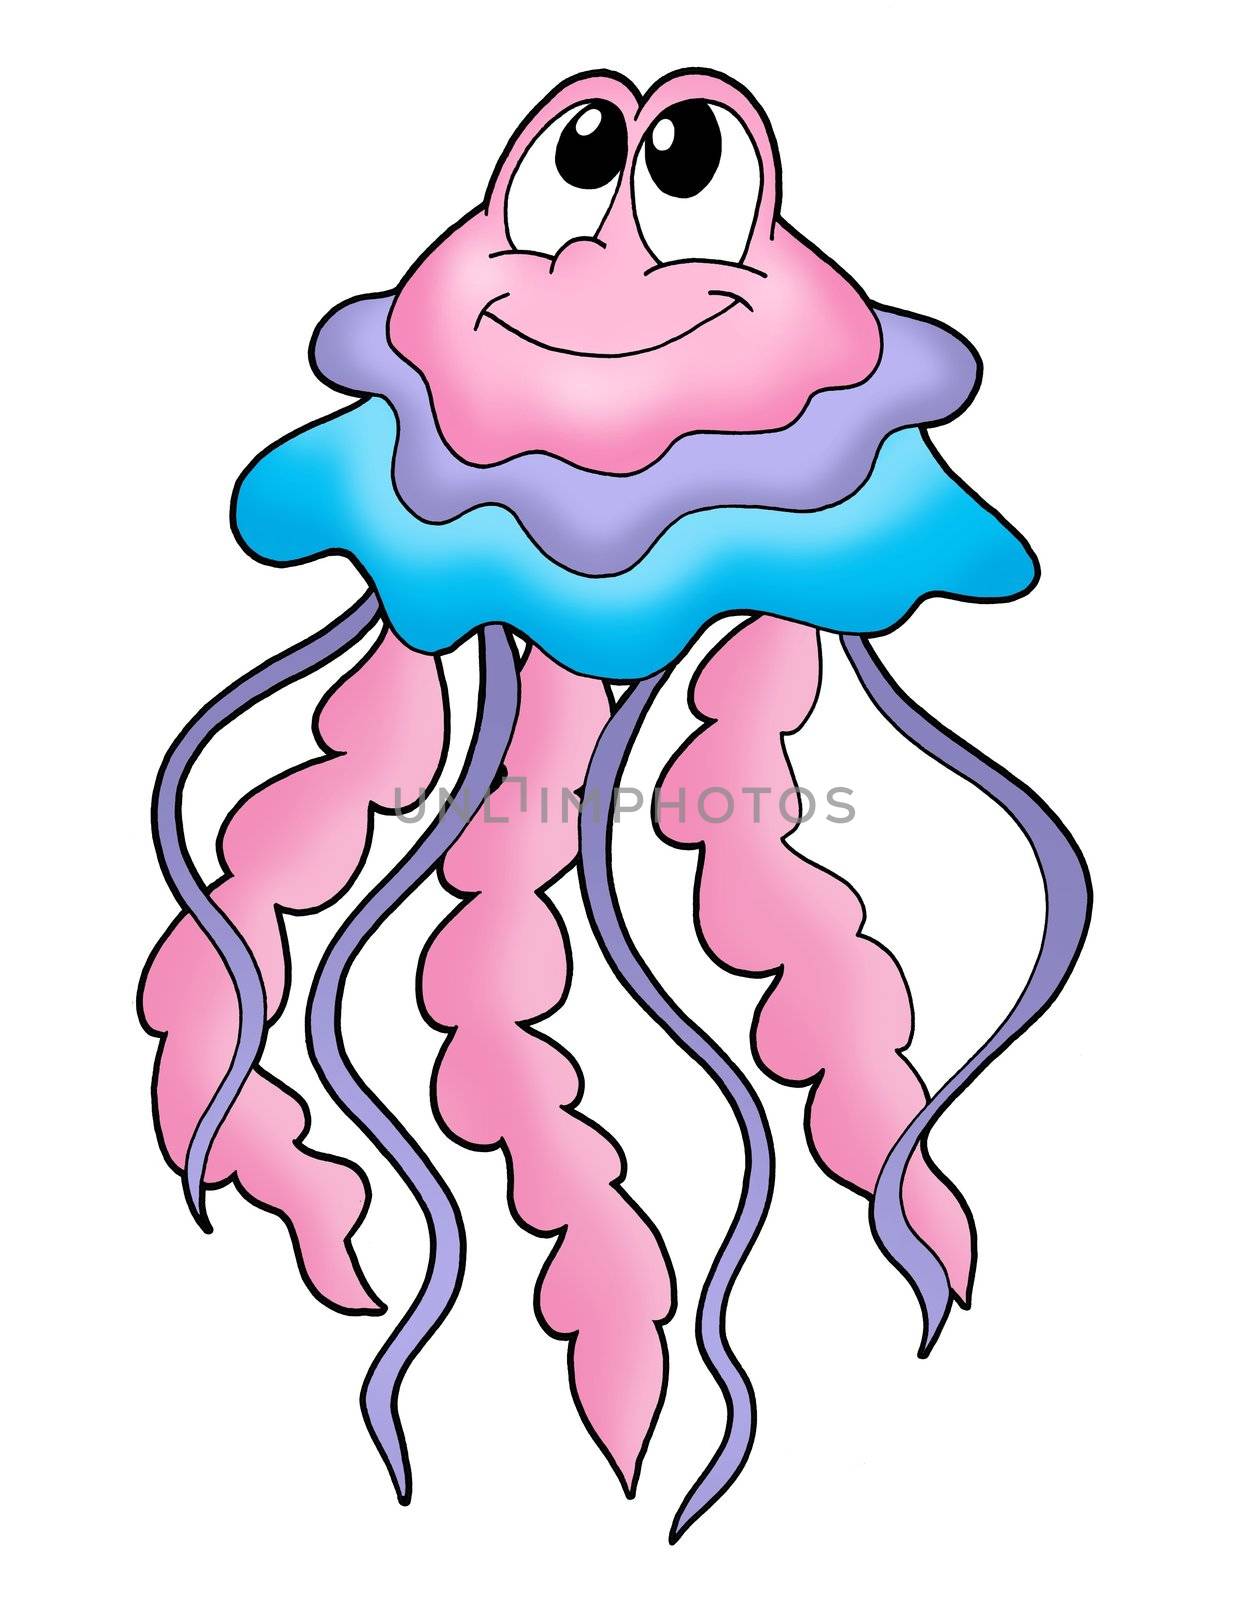 Color illustration of floating jellyfish.